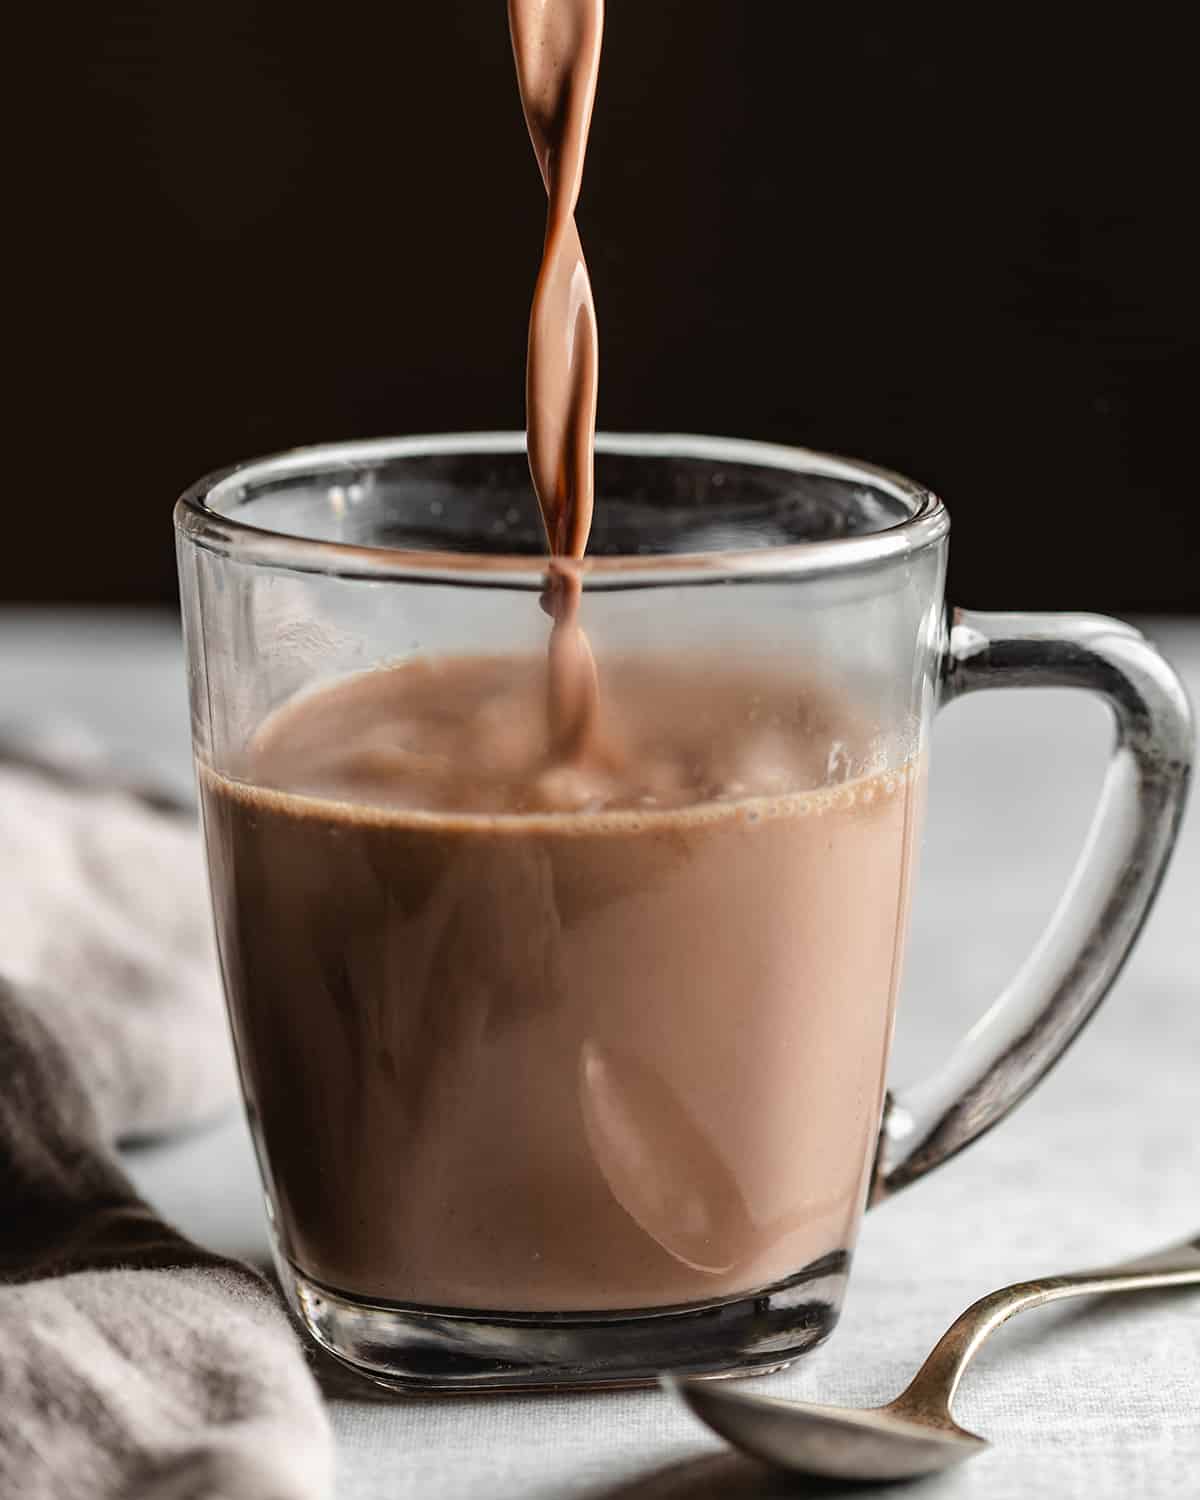 Crock pot Hot Chocolate being poured into a glass mug